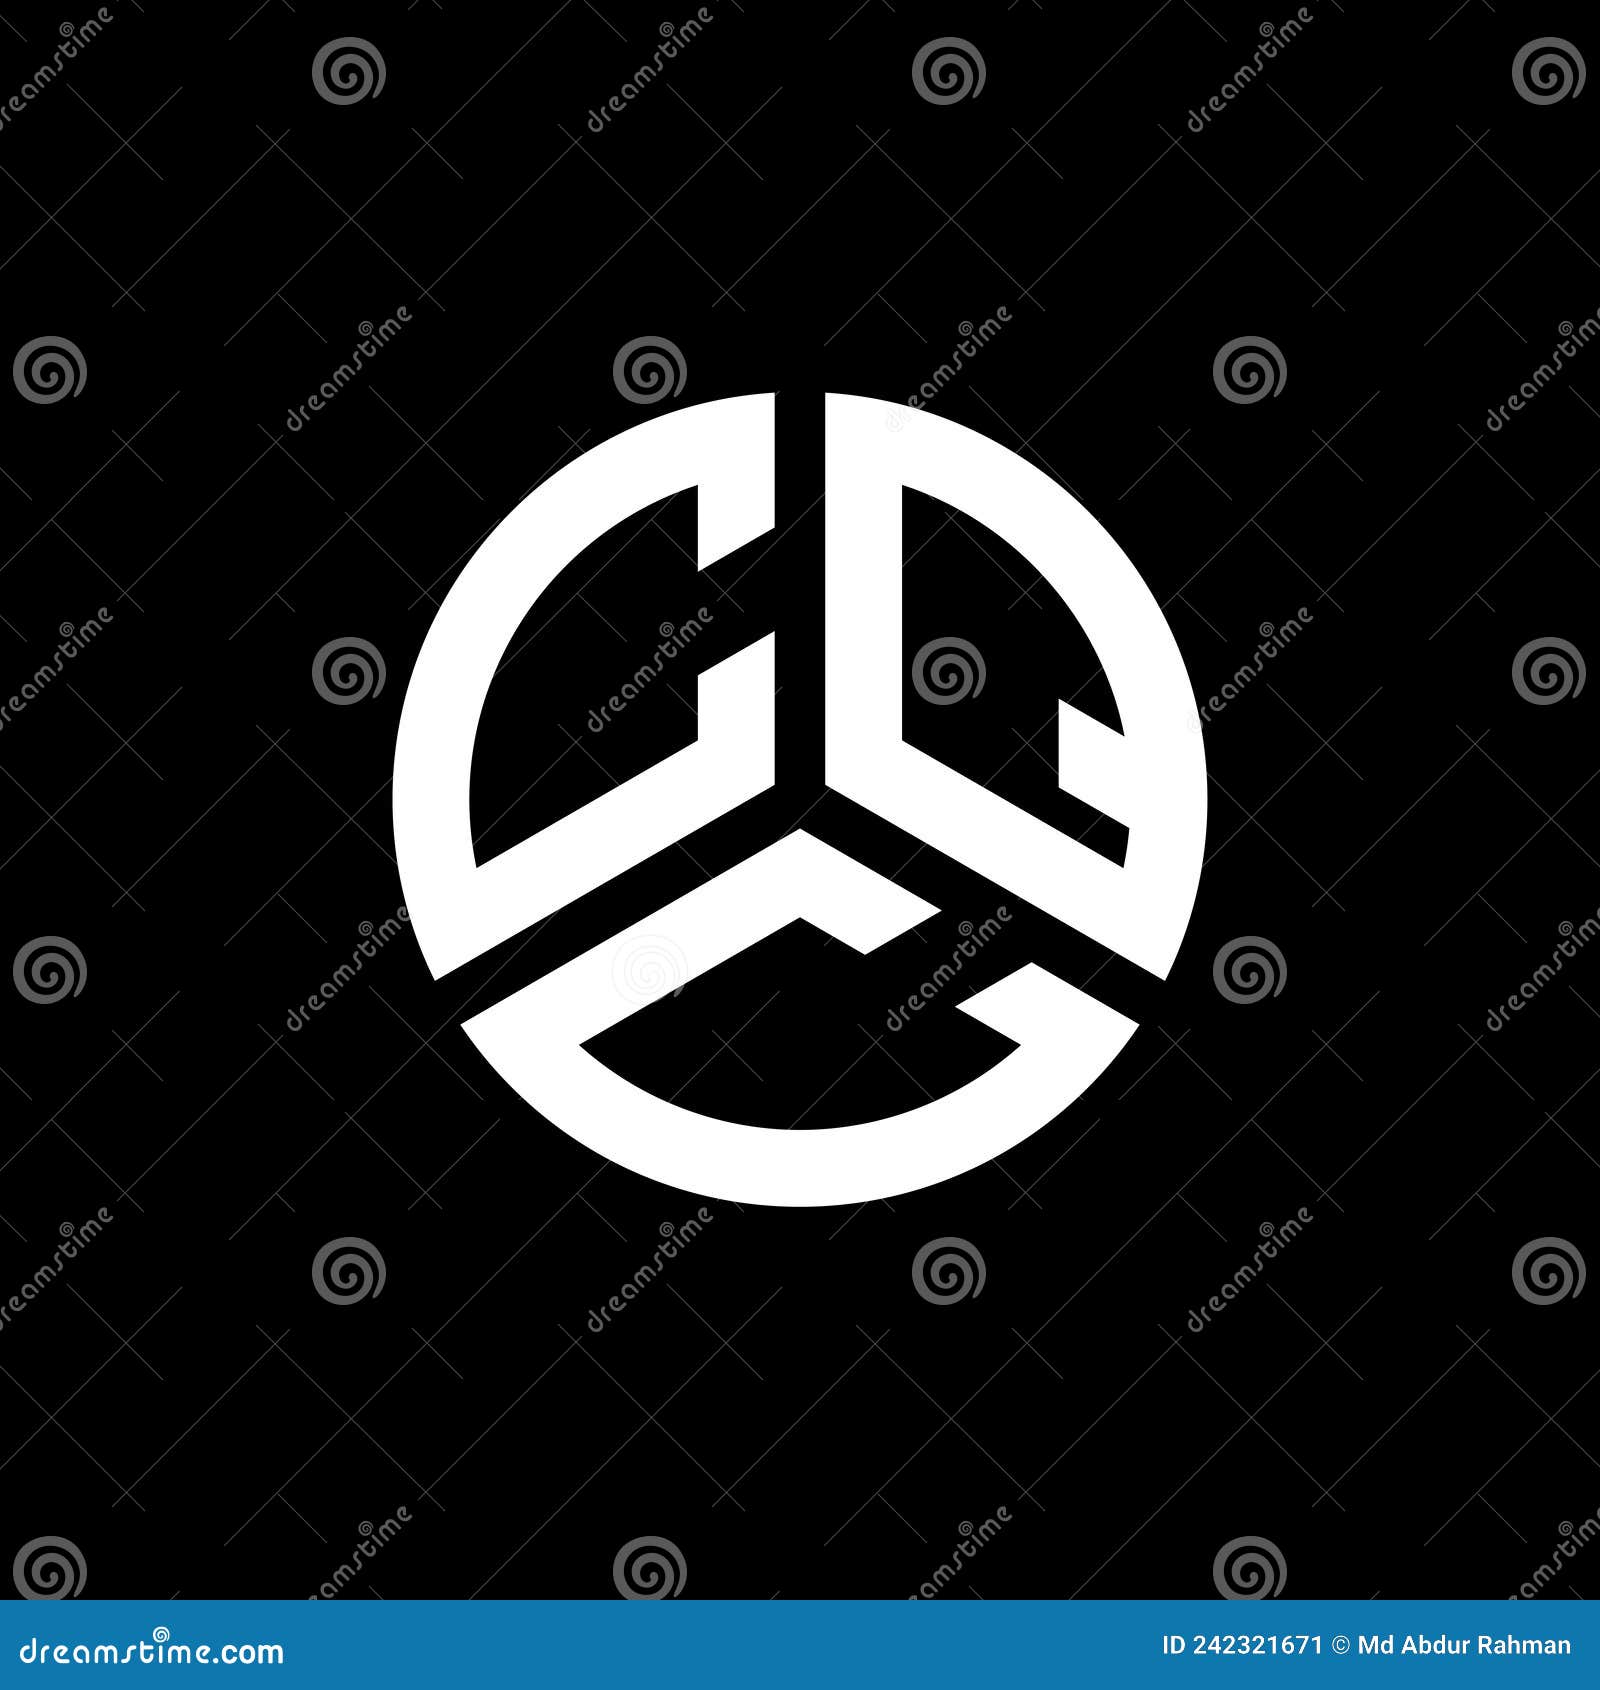 cqc letter logo  on white background. cqc creative initials letter logo concept. cqc letter 